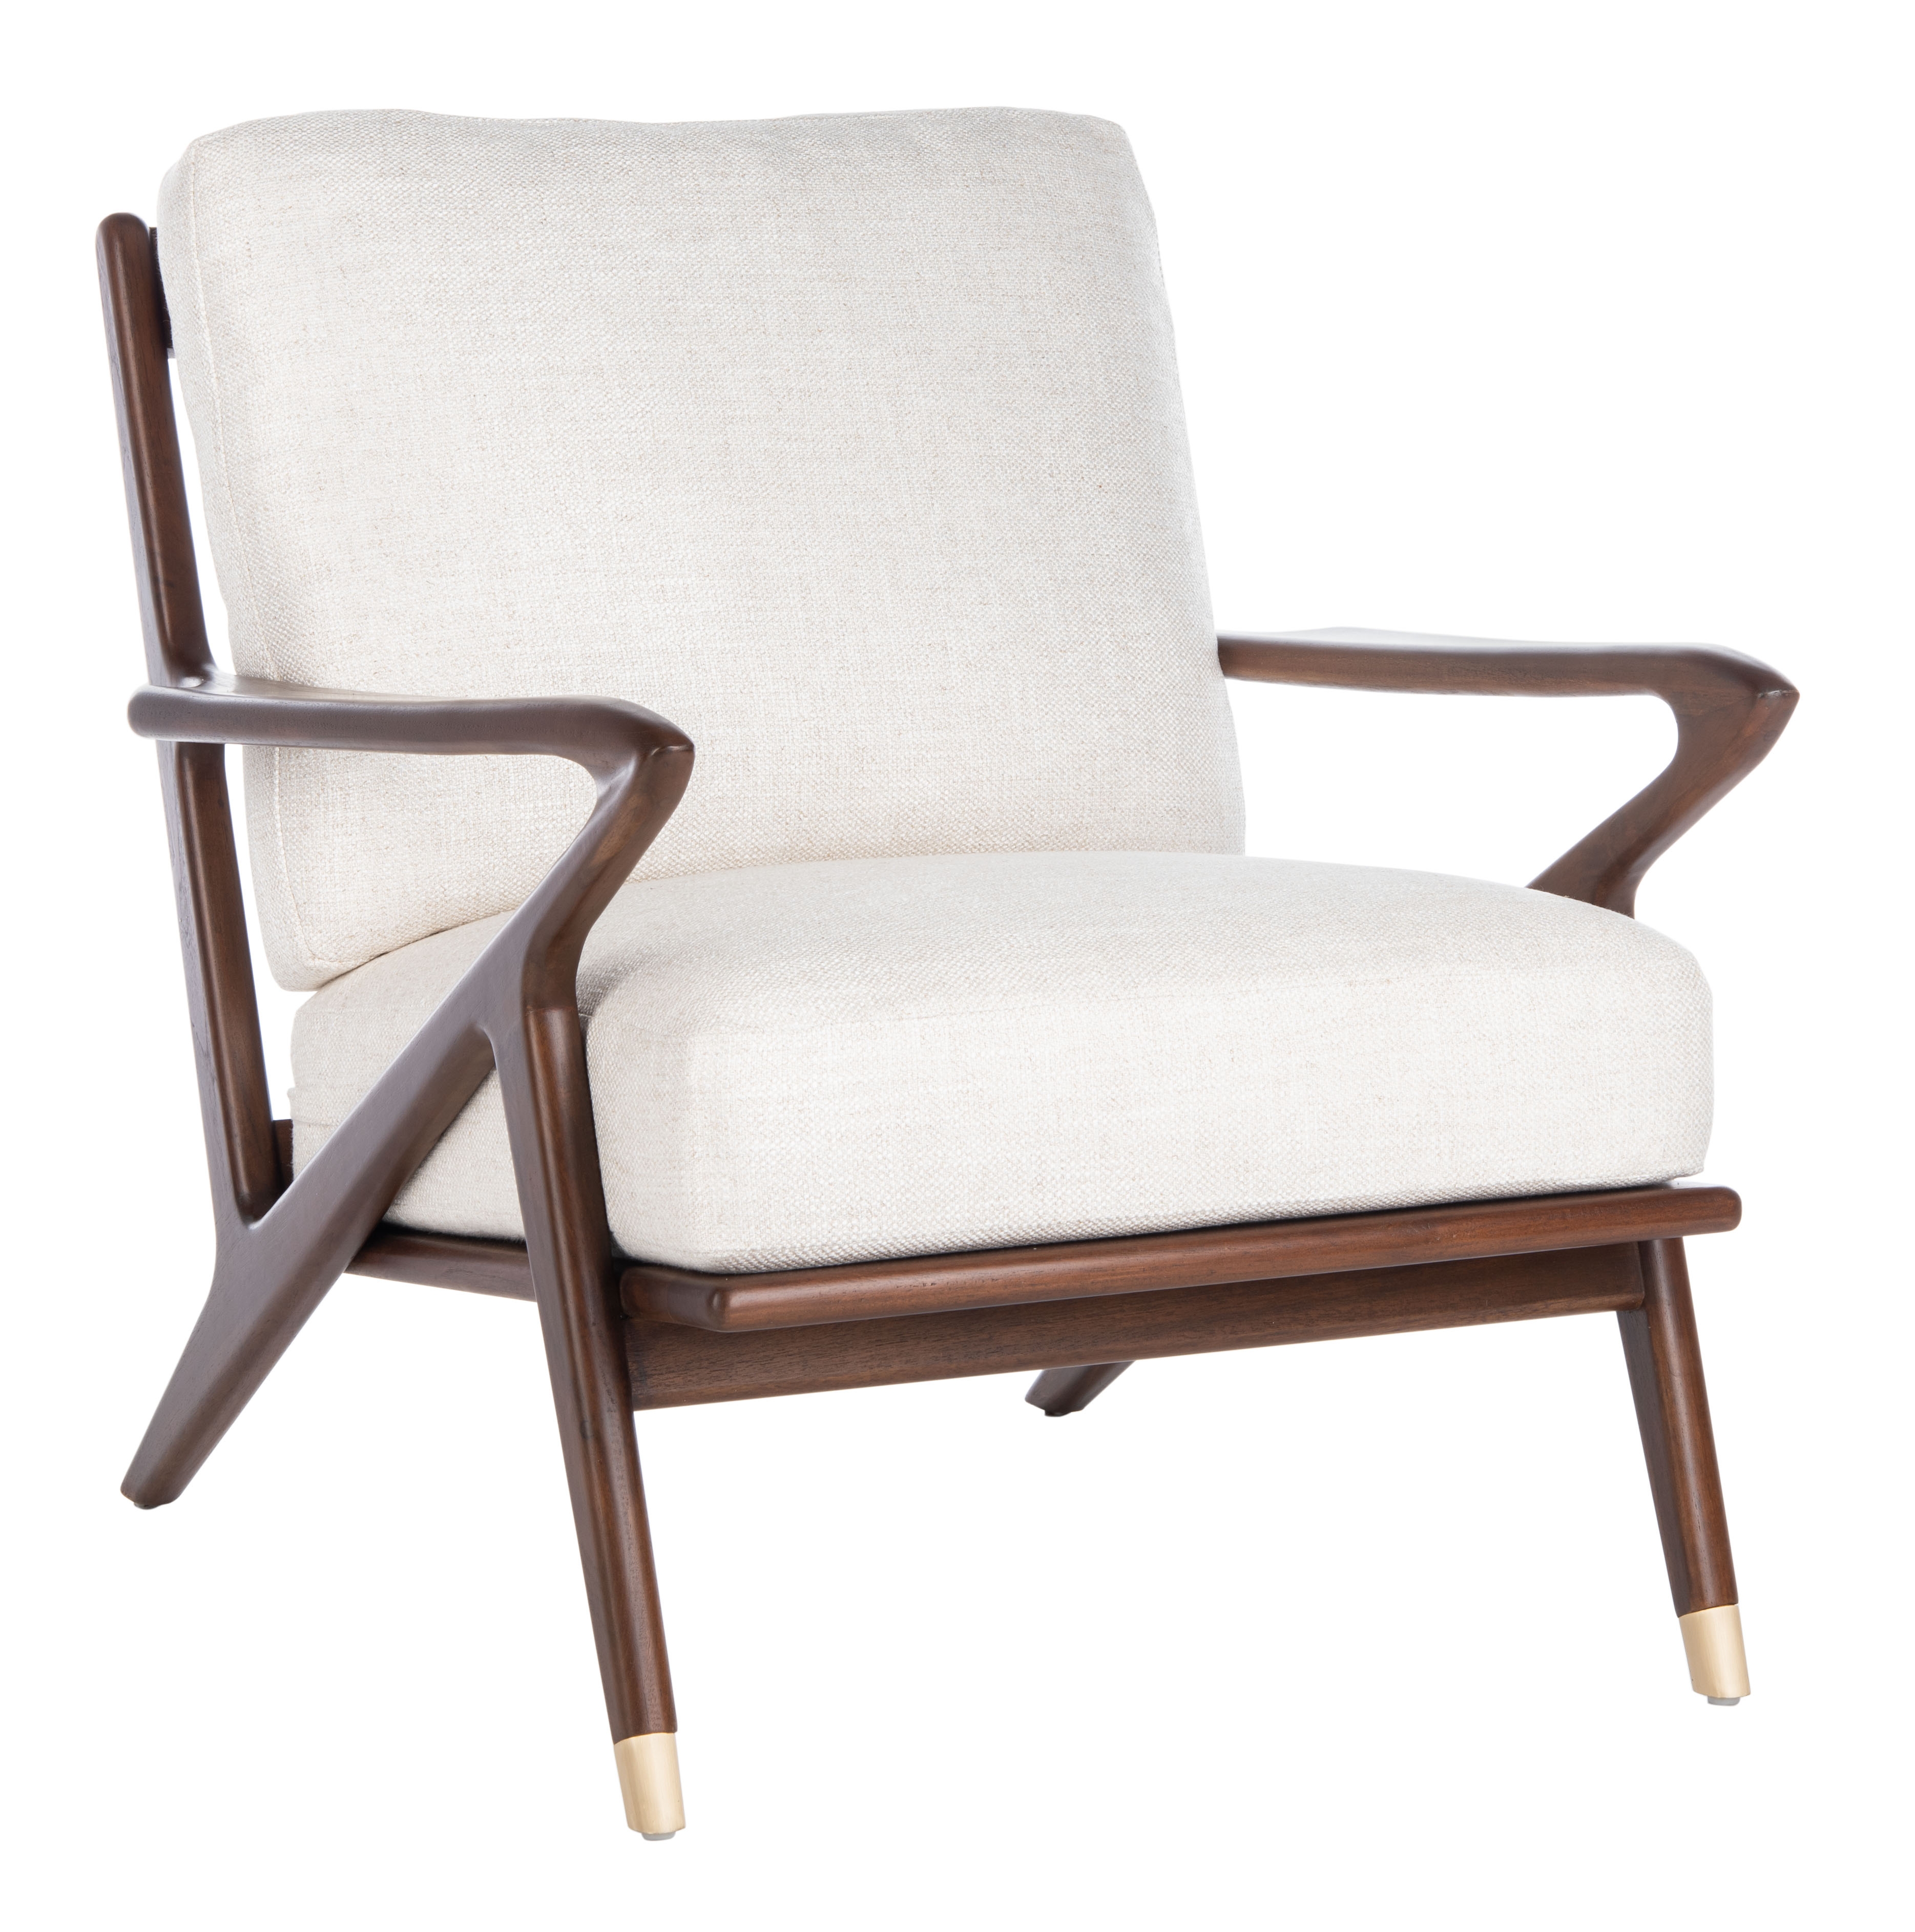 Killian Mid Century Accent Chair - Cream - Safavieh - Image 0